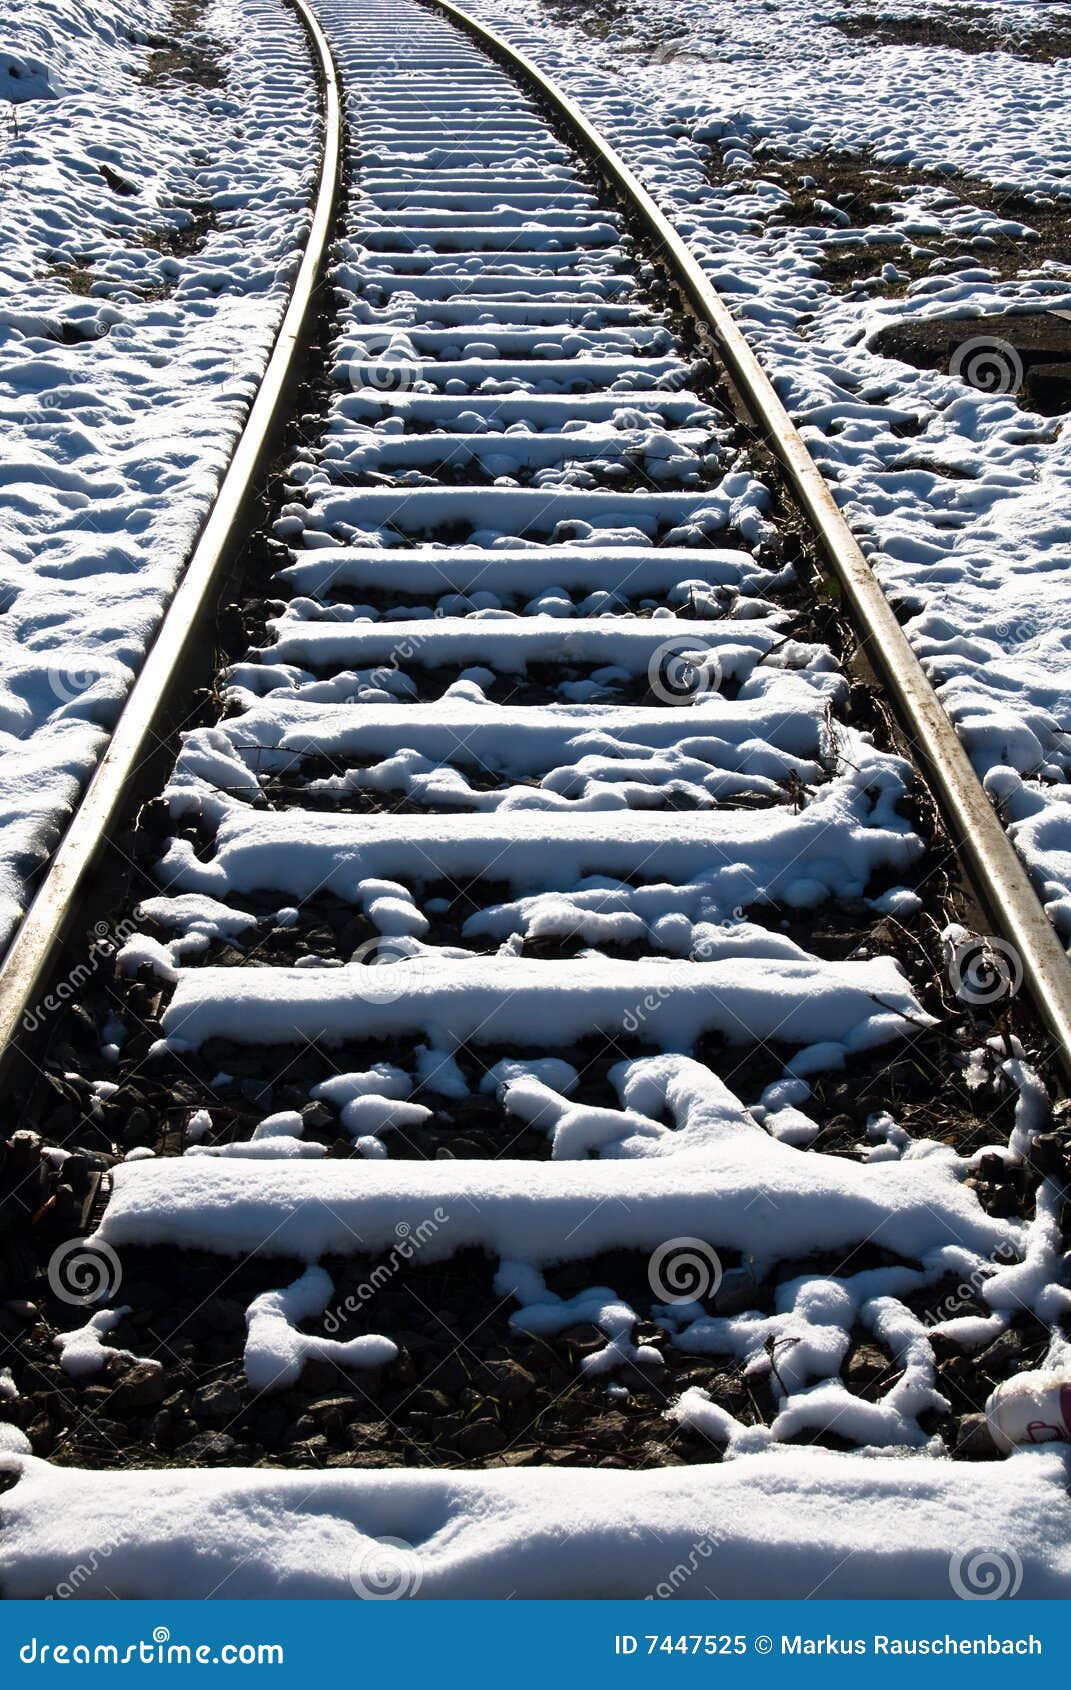 Snow on Railway tracks cross ties.